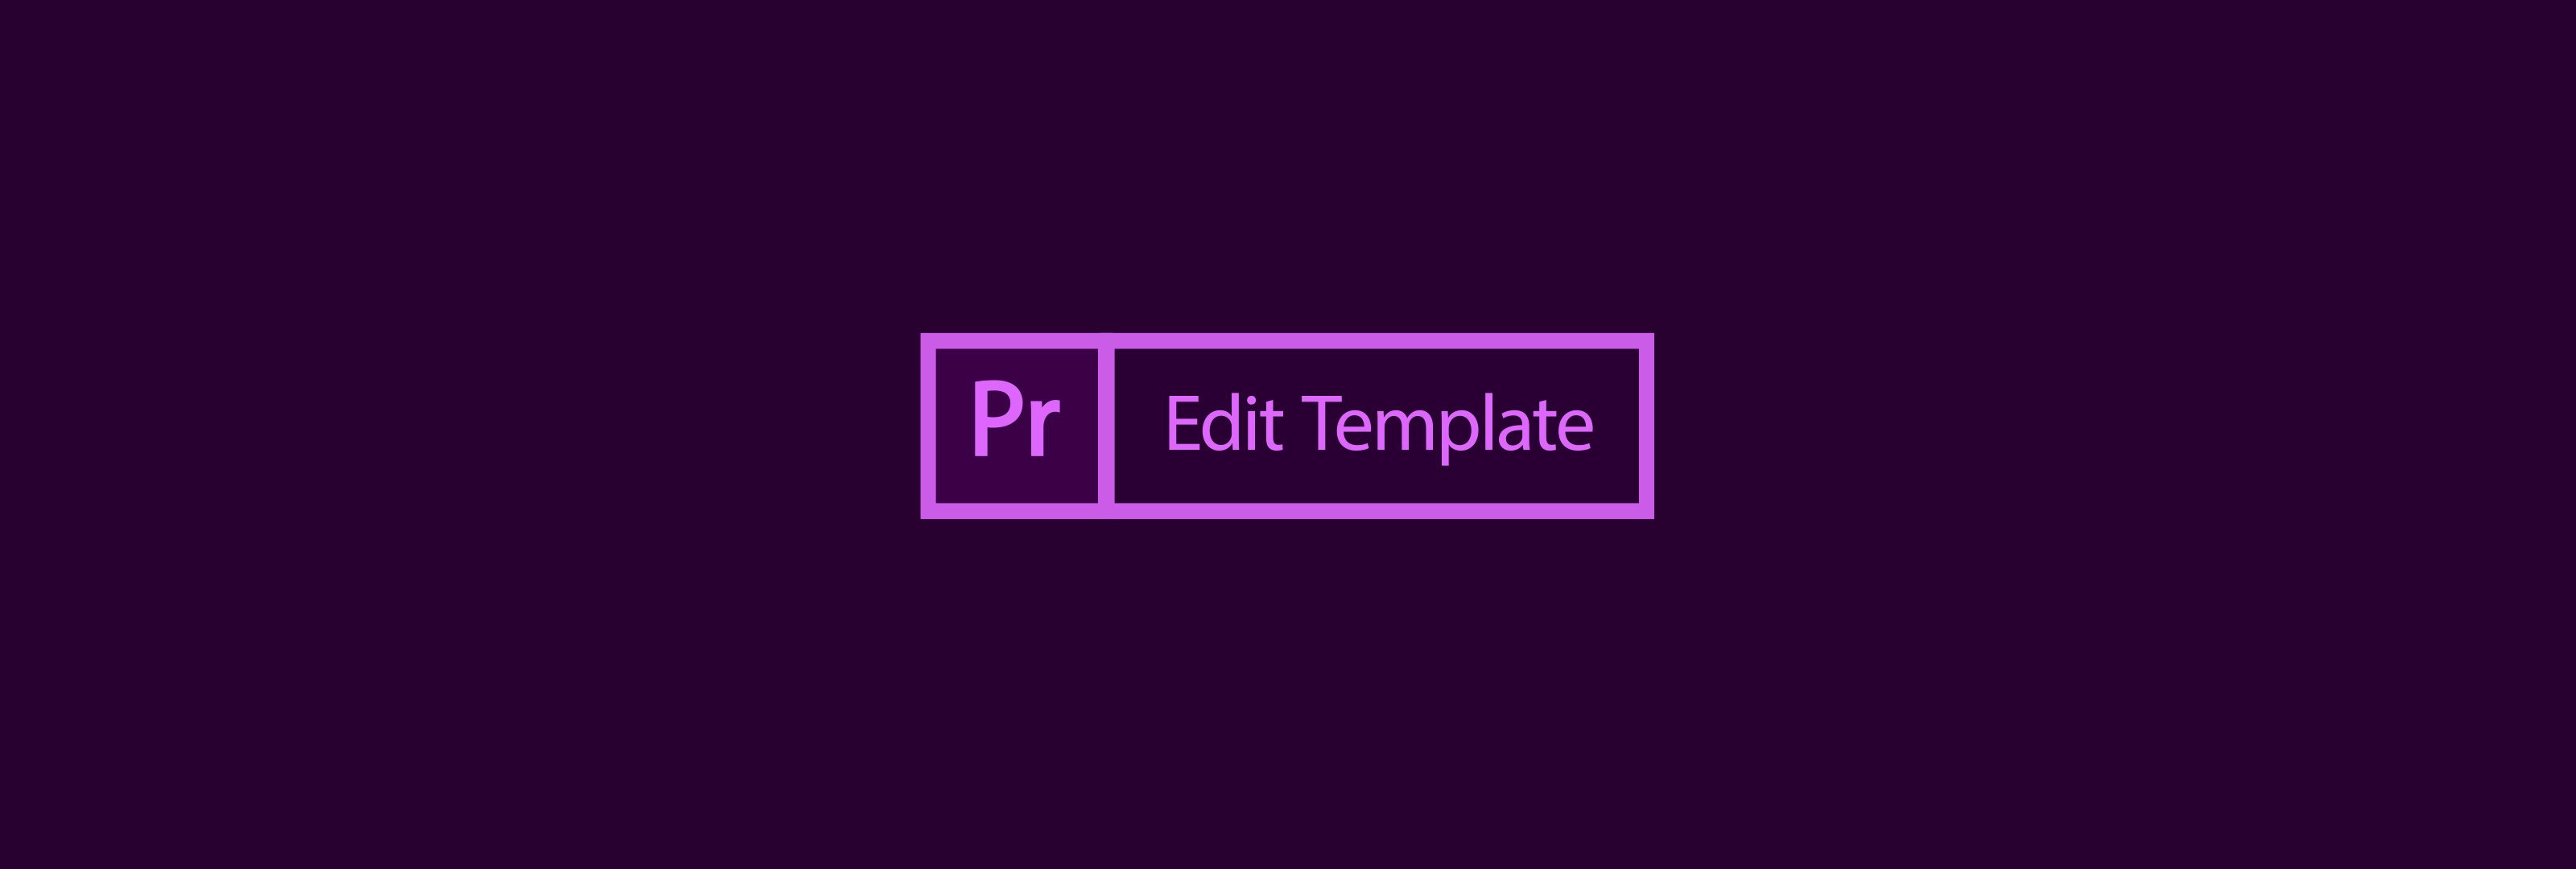 Free Premiere Pro Edit Template | Motion Array